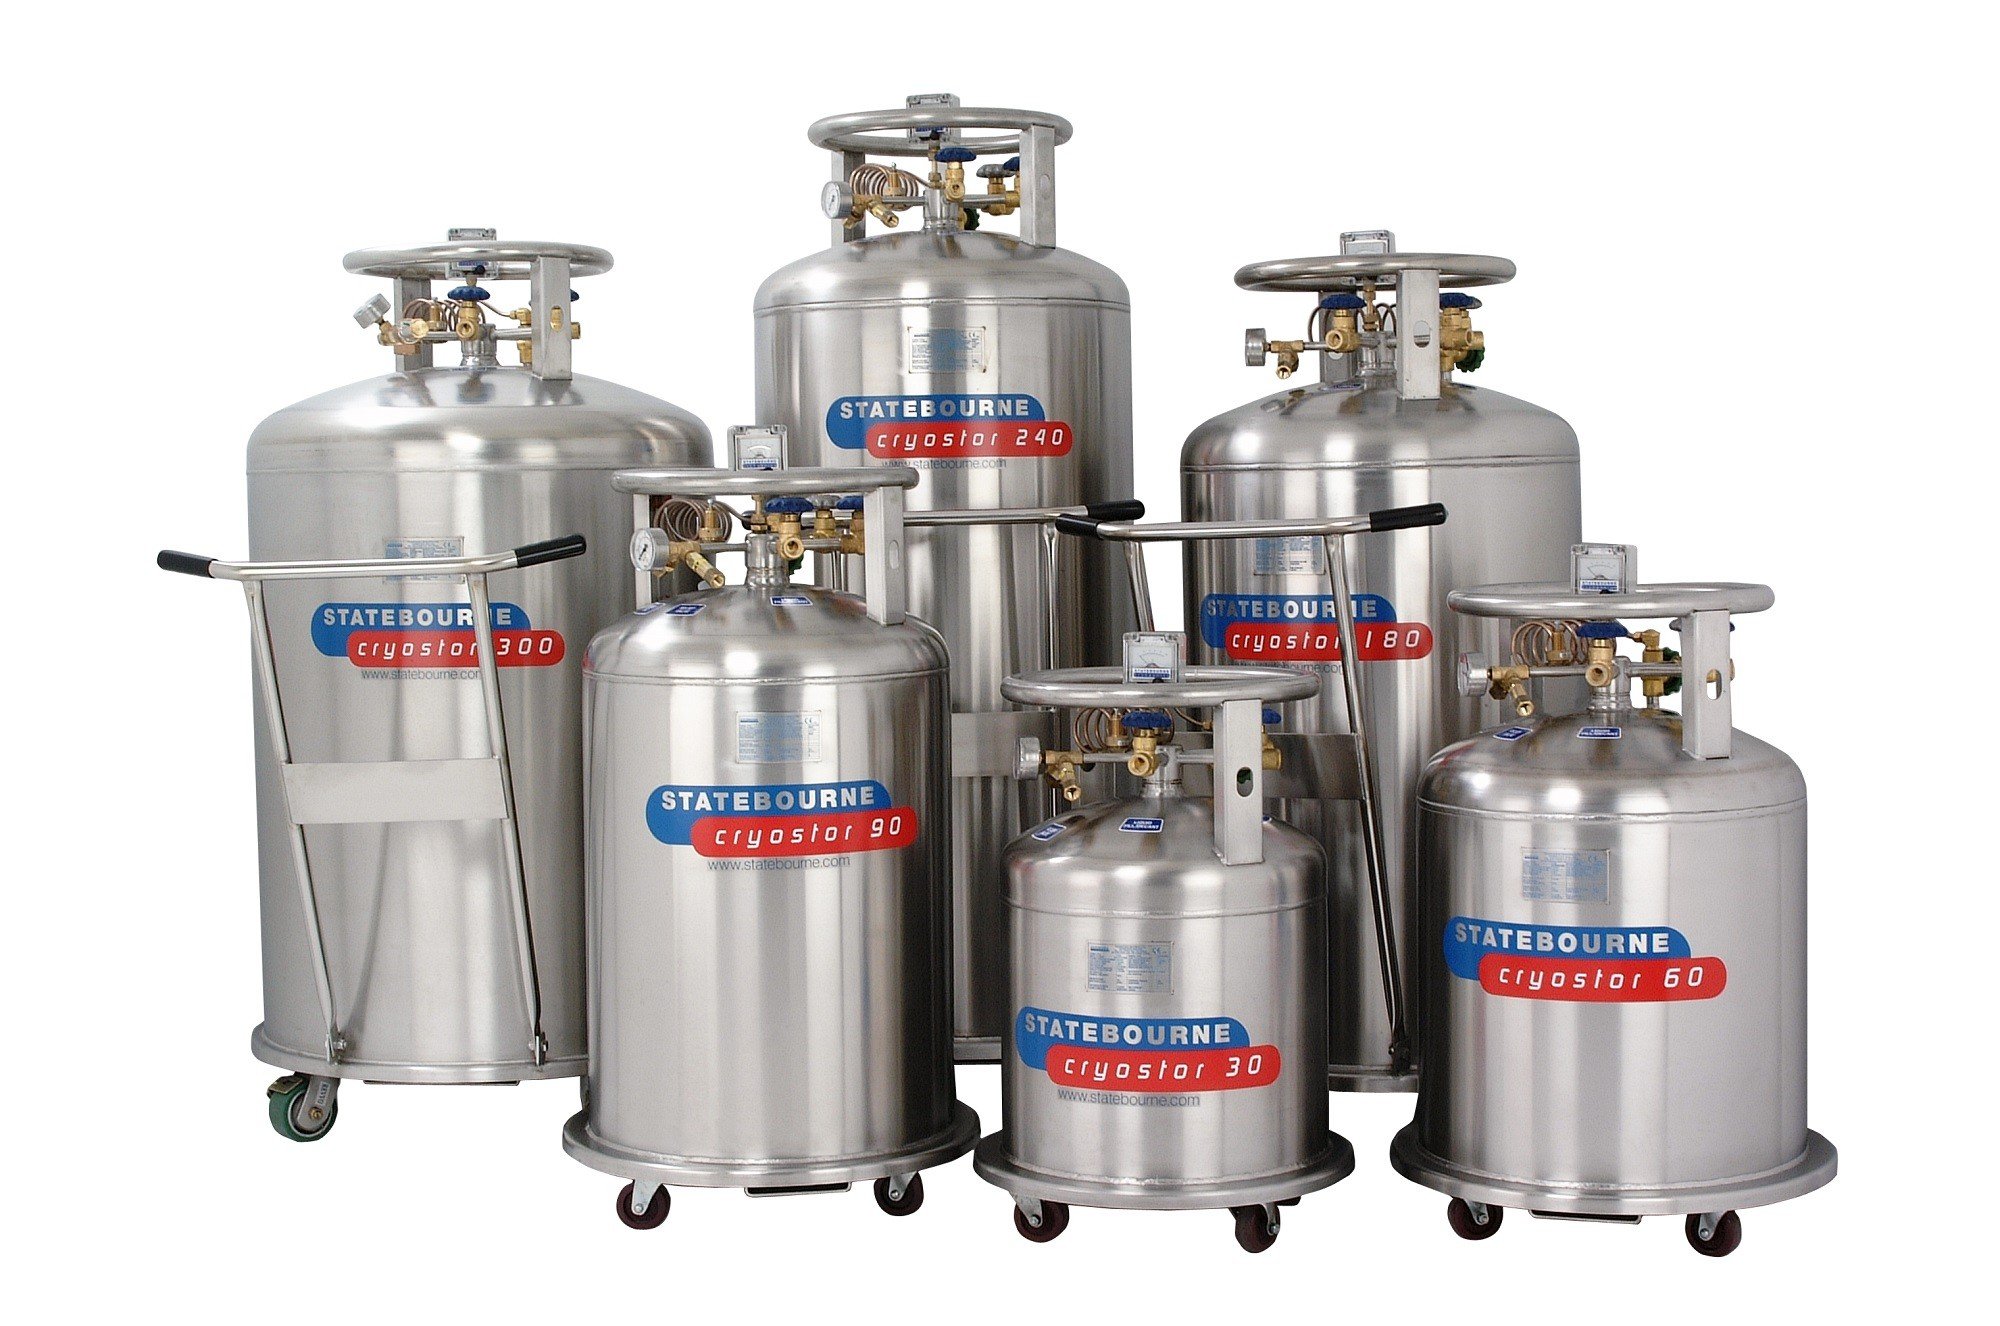 Statebourne Cryogenics 9911075 Cryostor 180 Stainless Steel Low Pressure LN2 Dewars 180 Litres for storage and dispensing liquid nitrogen